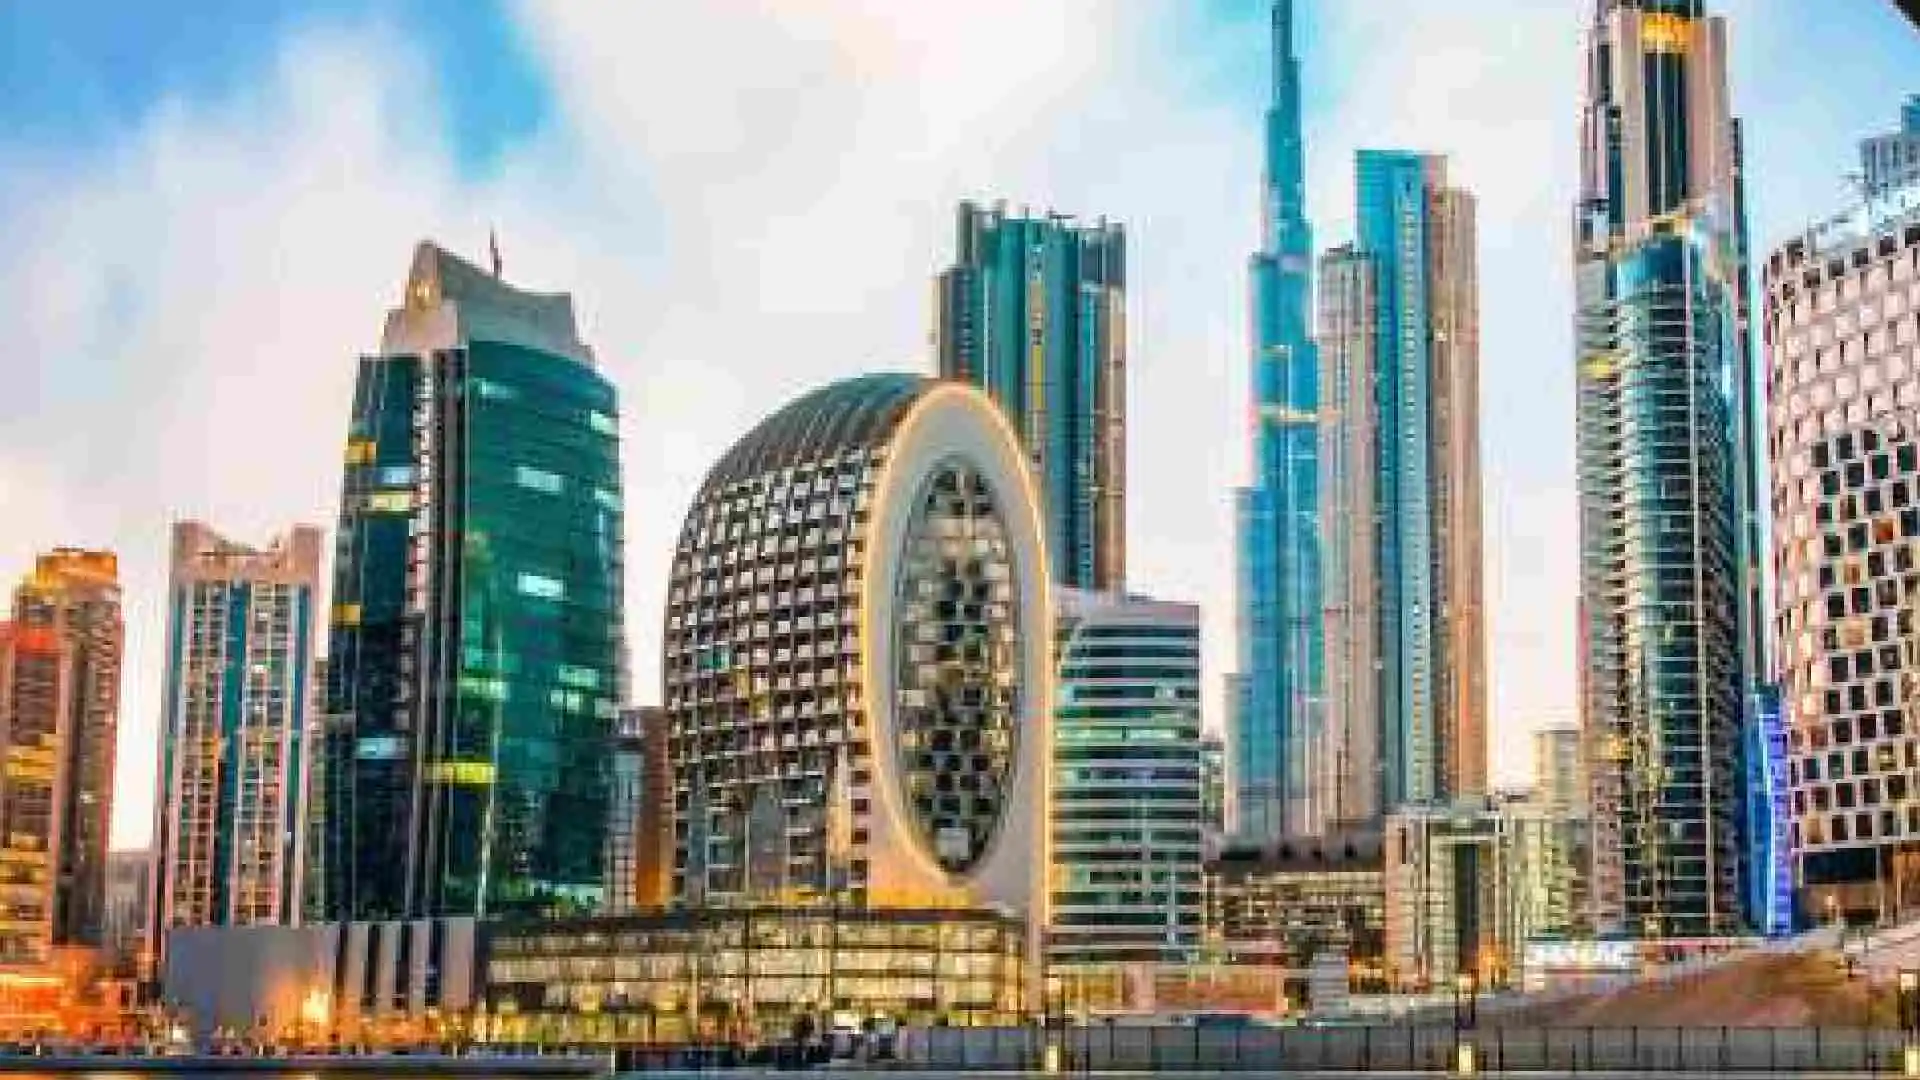 list of companies in Business Bay Dubai